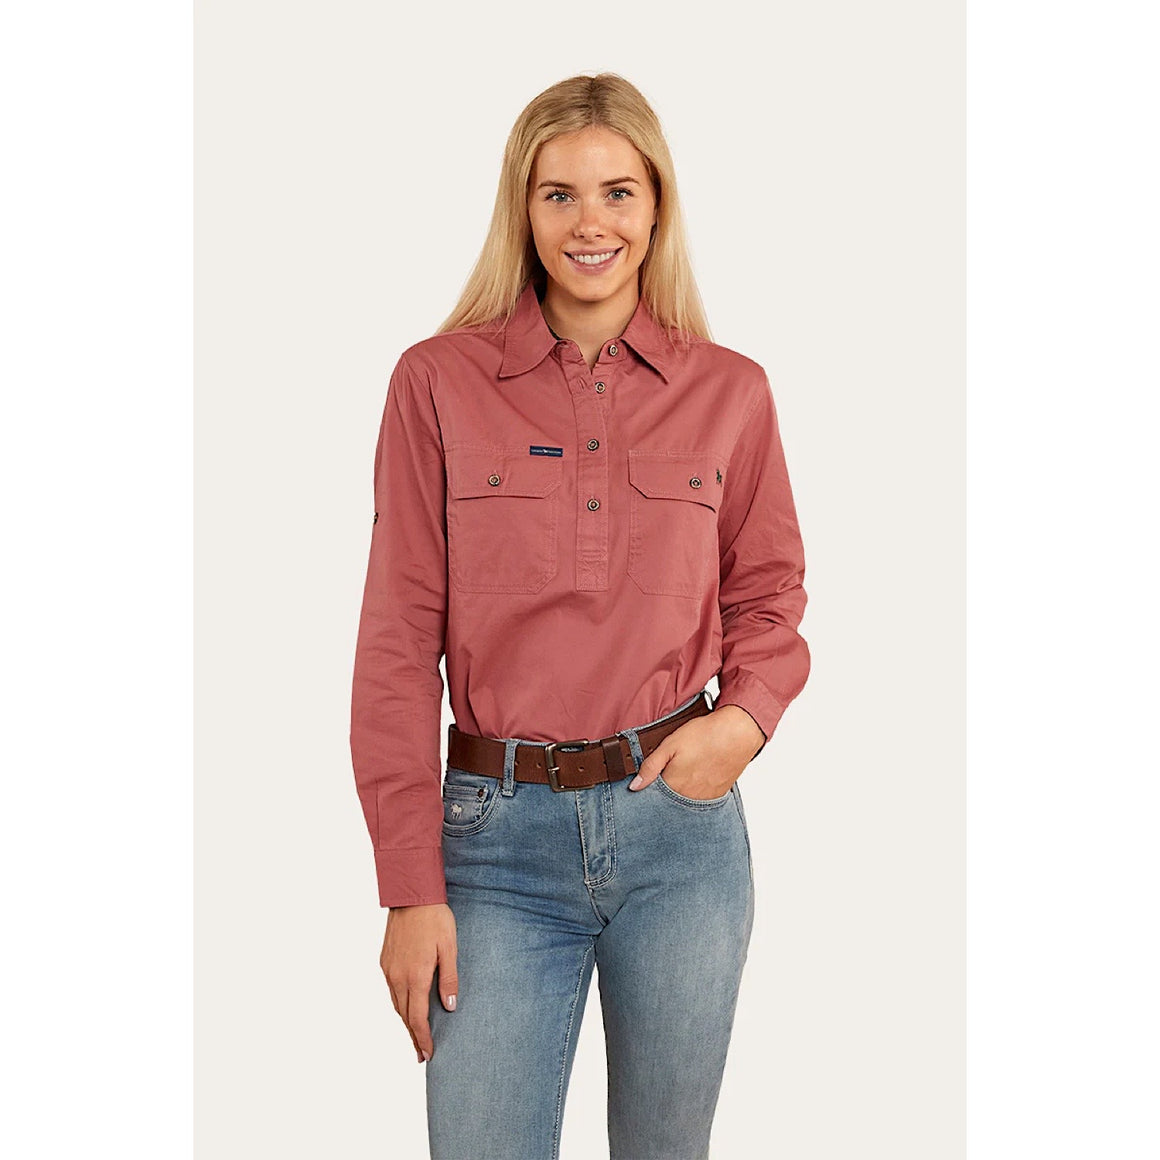 Ringers Western Pentecost River Women's Half Button Work Shirt - Dusty Rose